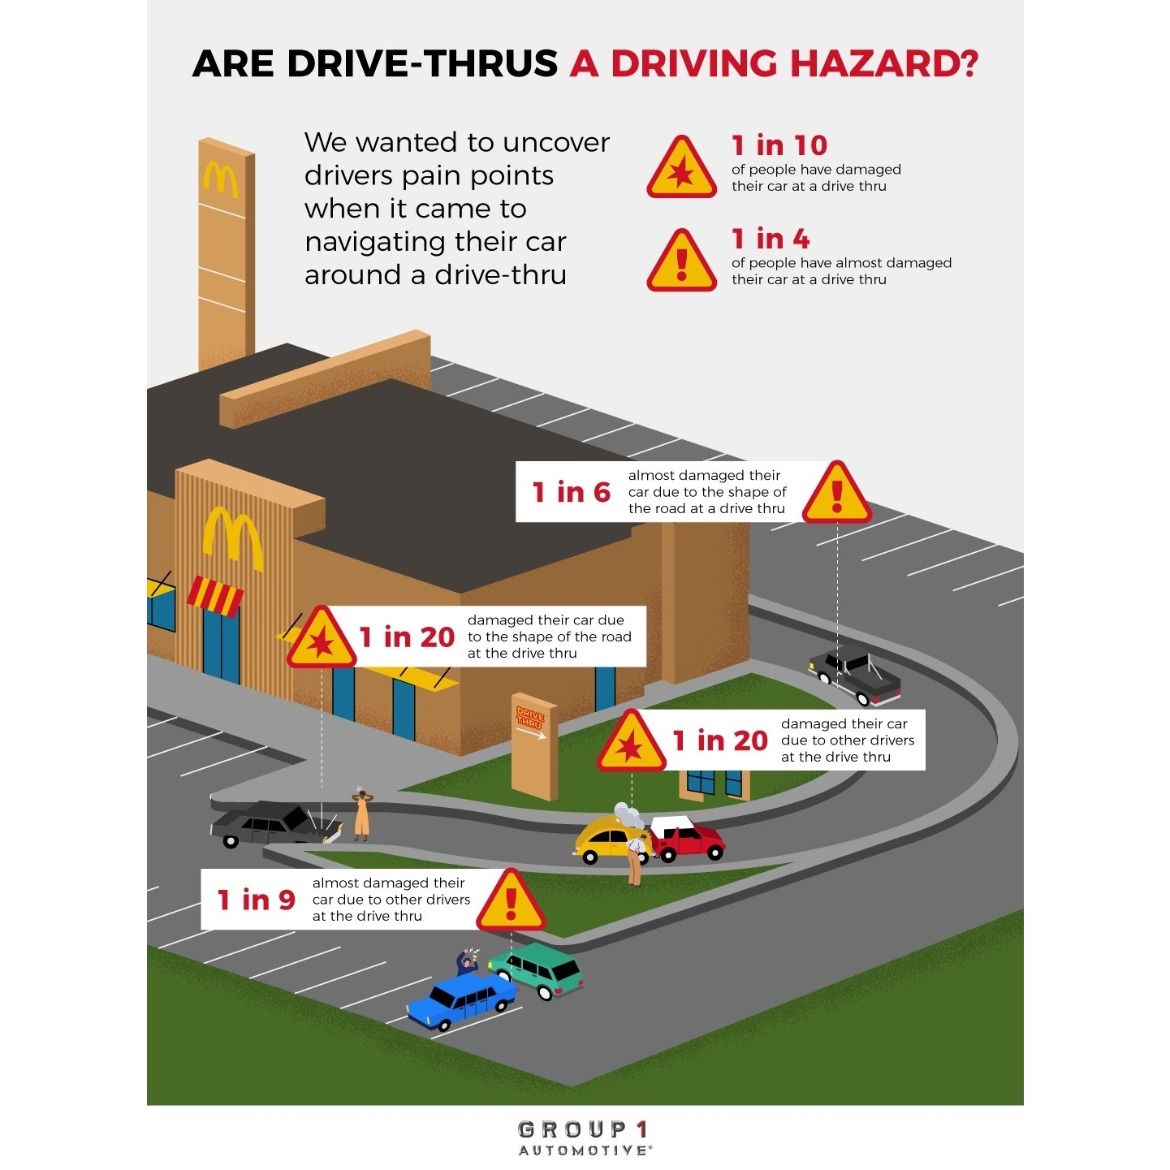 Are drive-thrus a hazard?